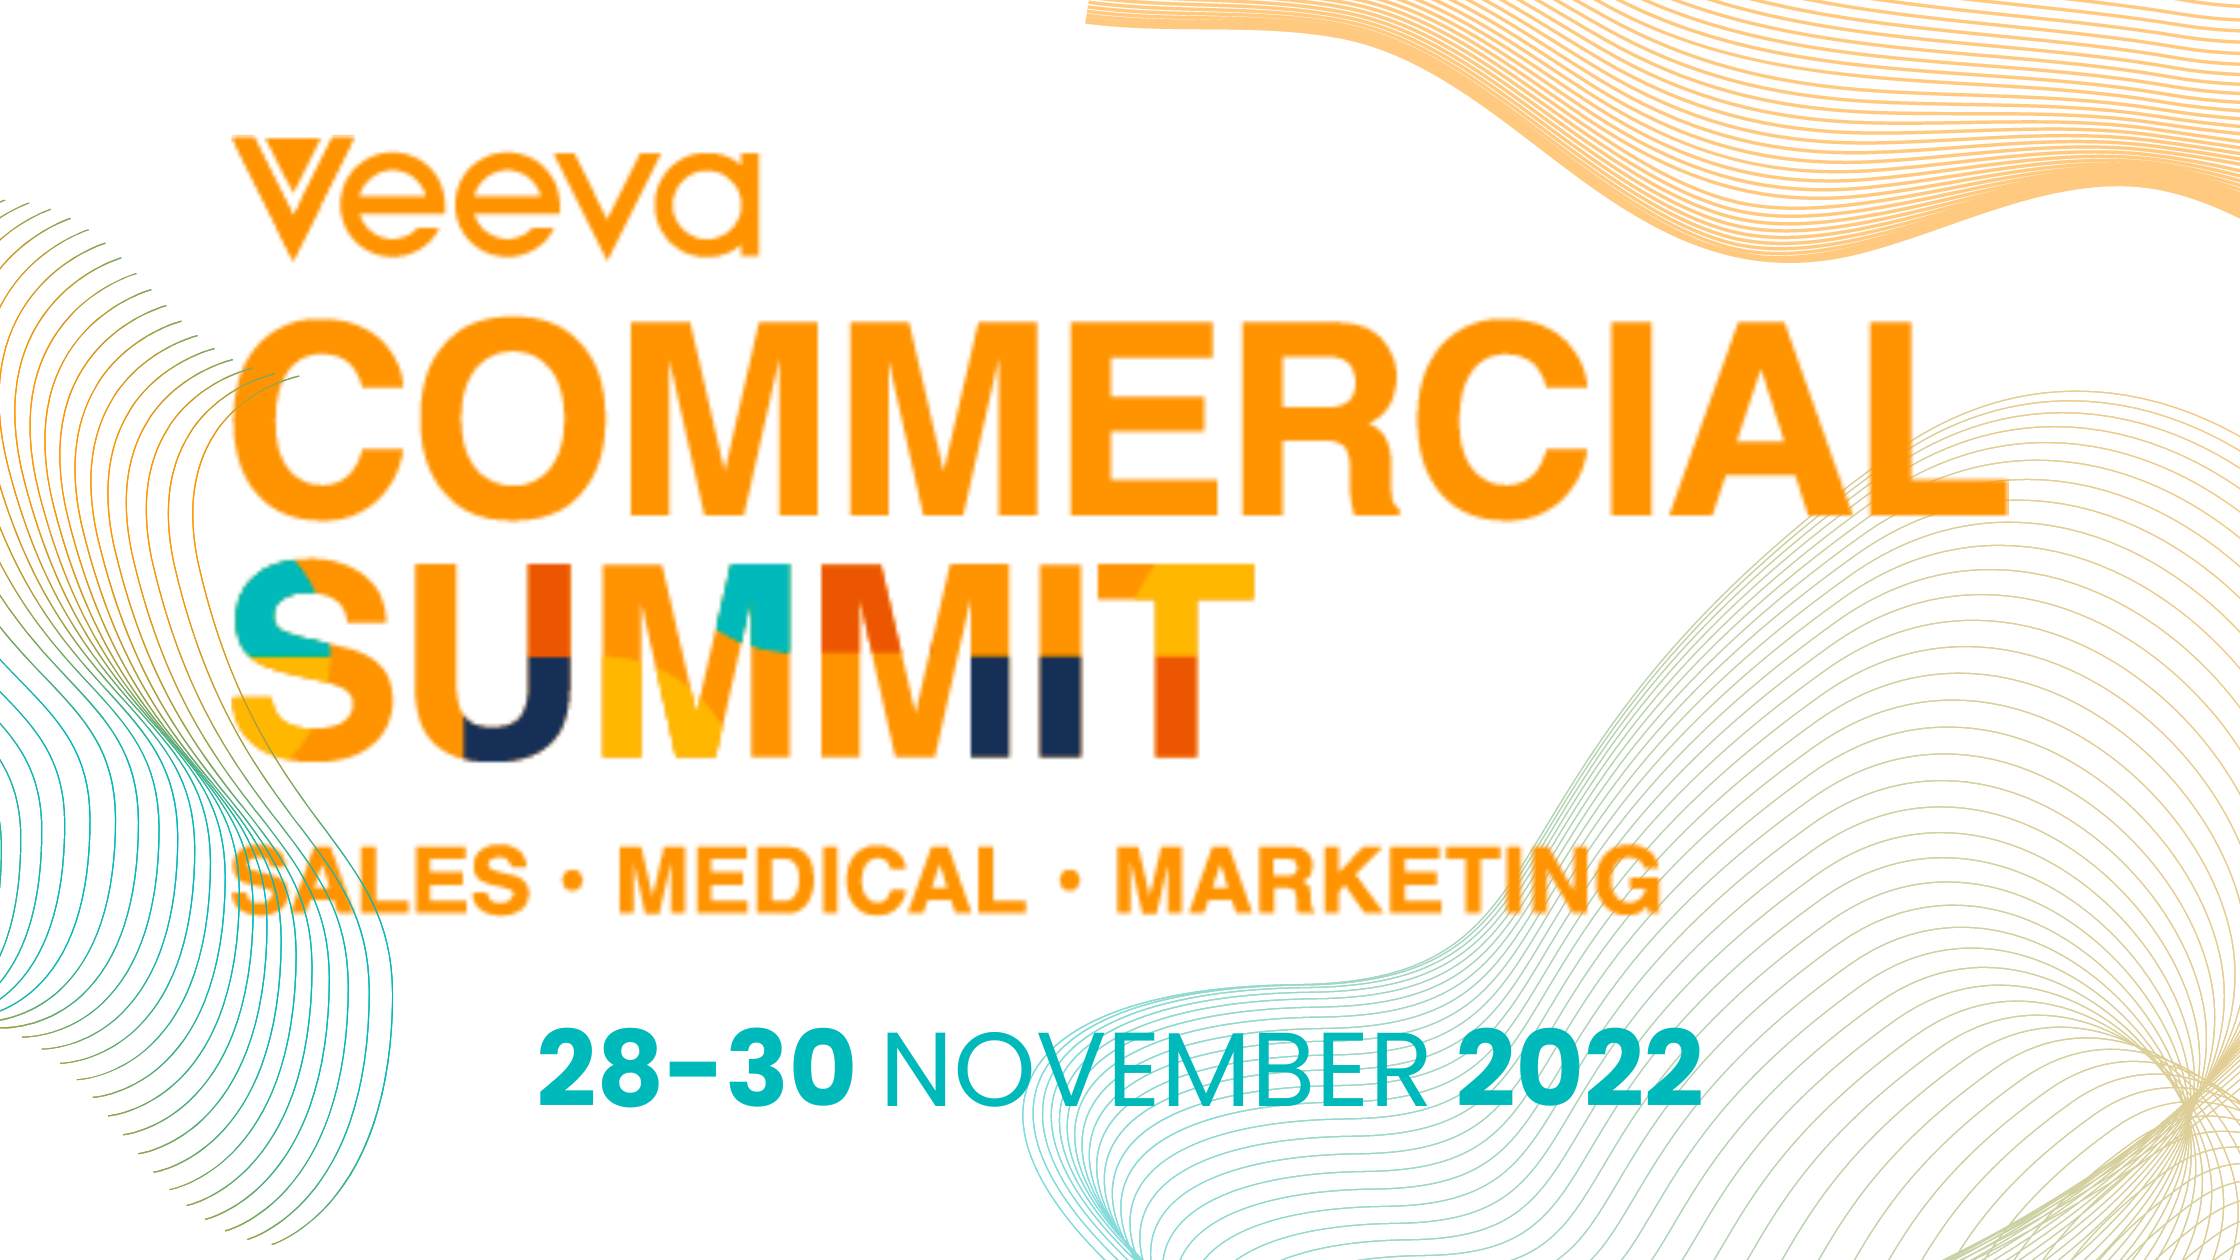 Veeva Commercial Summit 2022